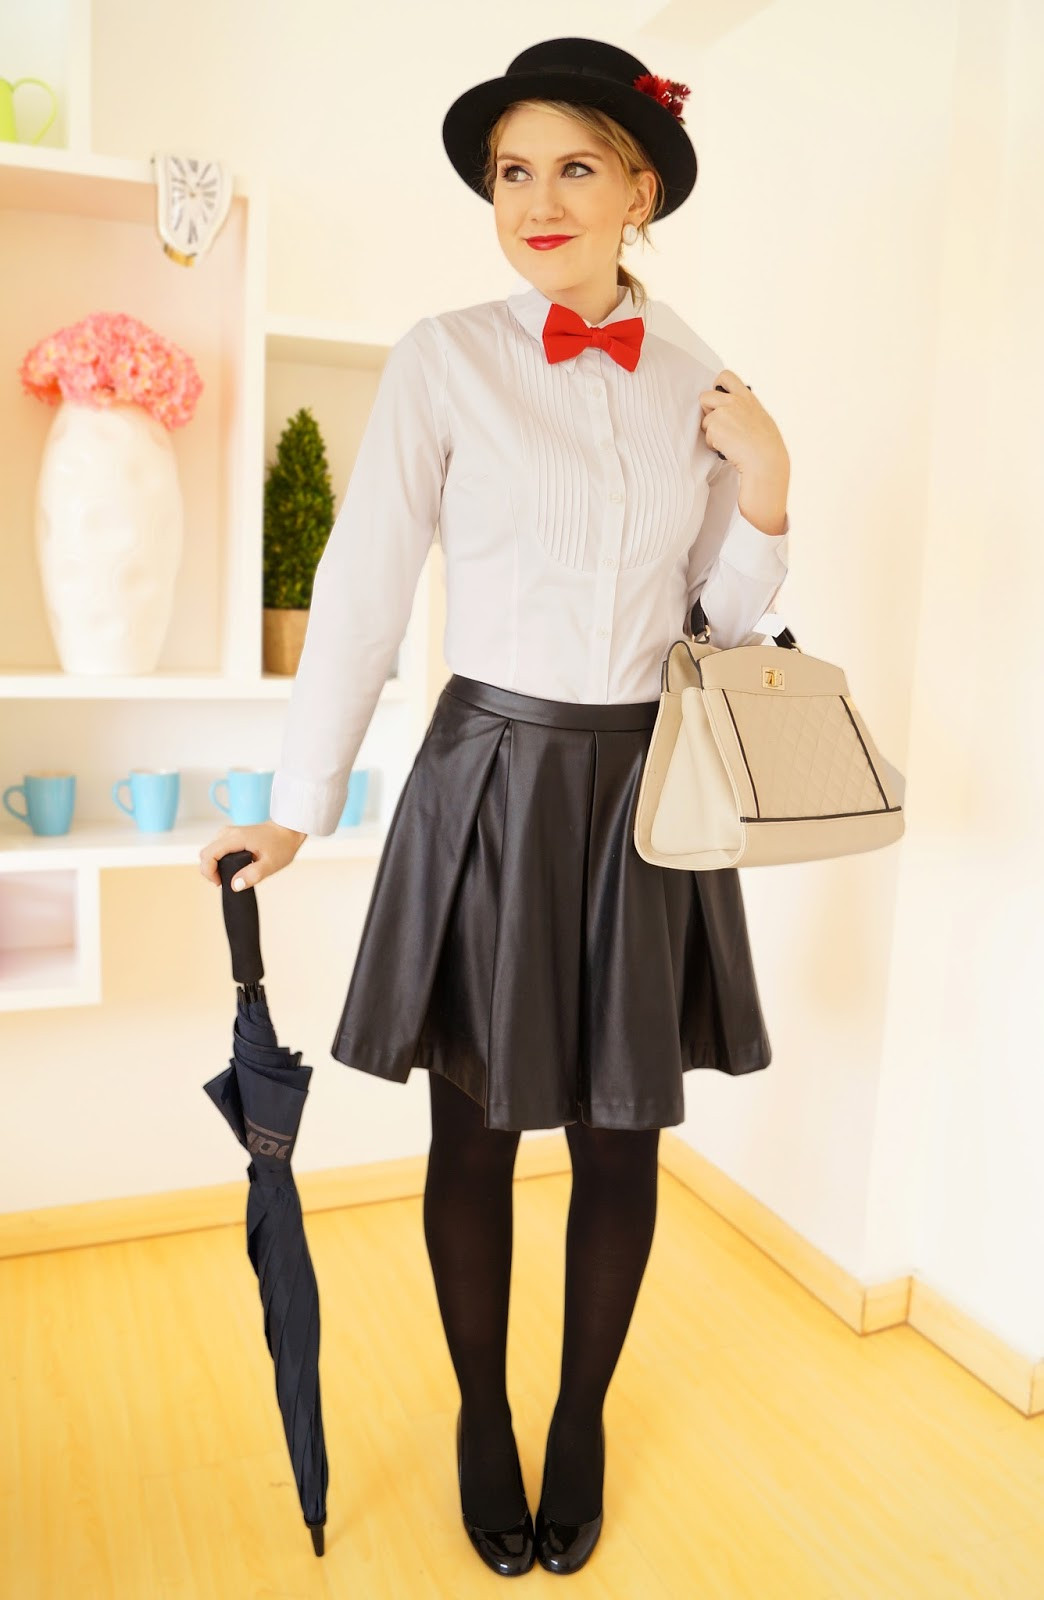 Mary Costume DIY
 The Joy of Fashion Halloween Homemade Mary Poppins Costume